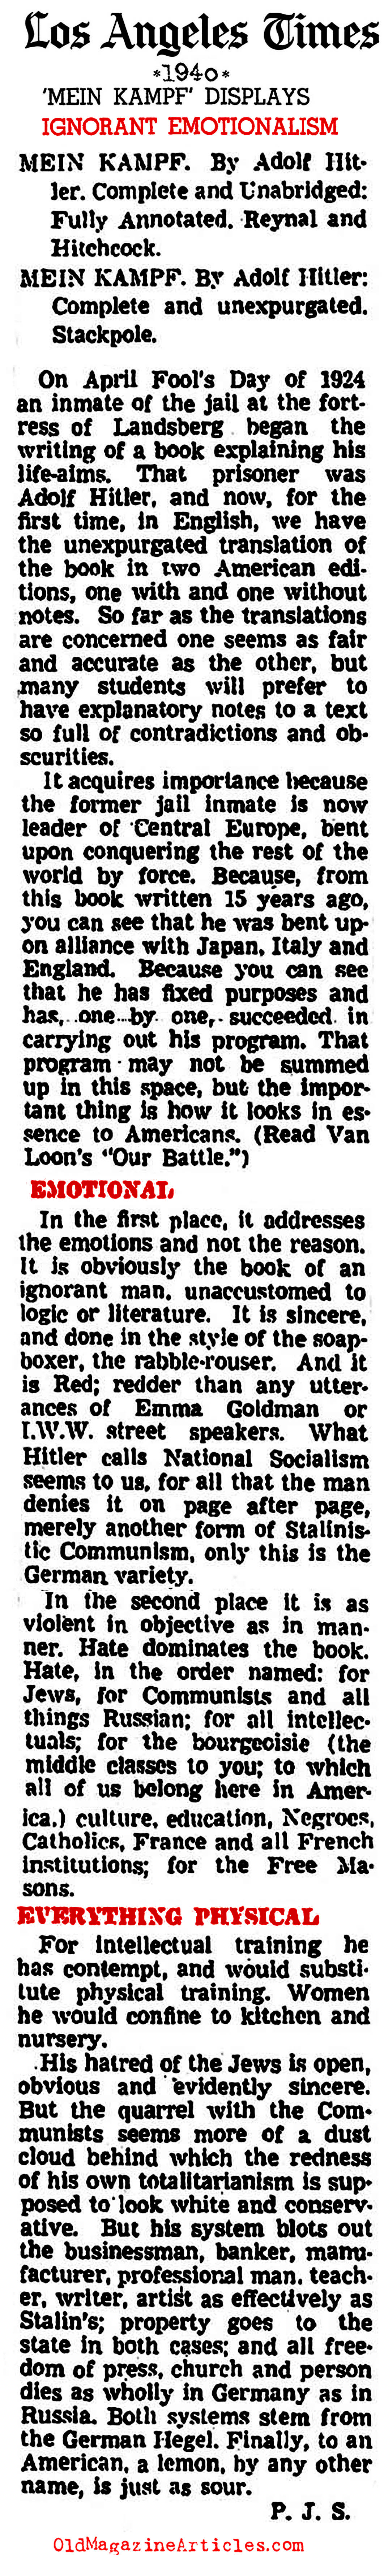 <i>Mein Kampf</i>   Reviewed (L.A. Times, 1940)